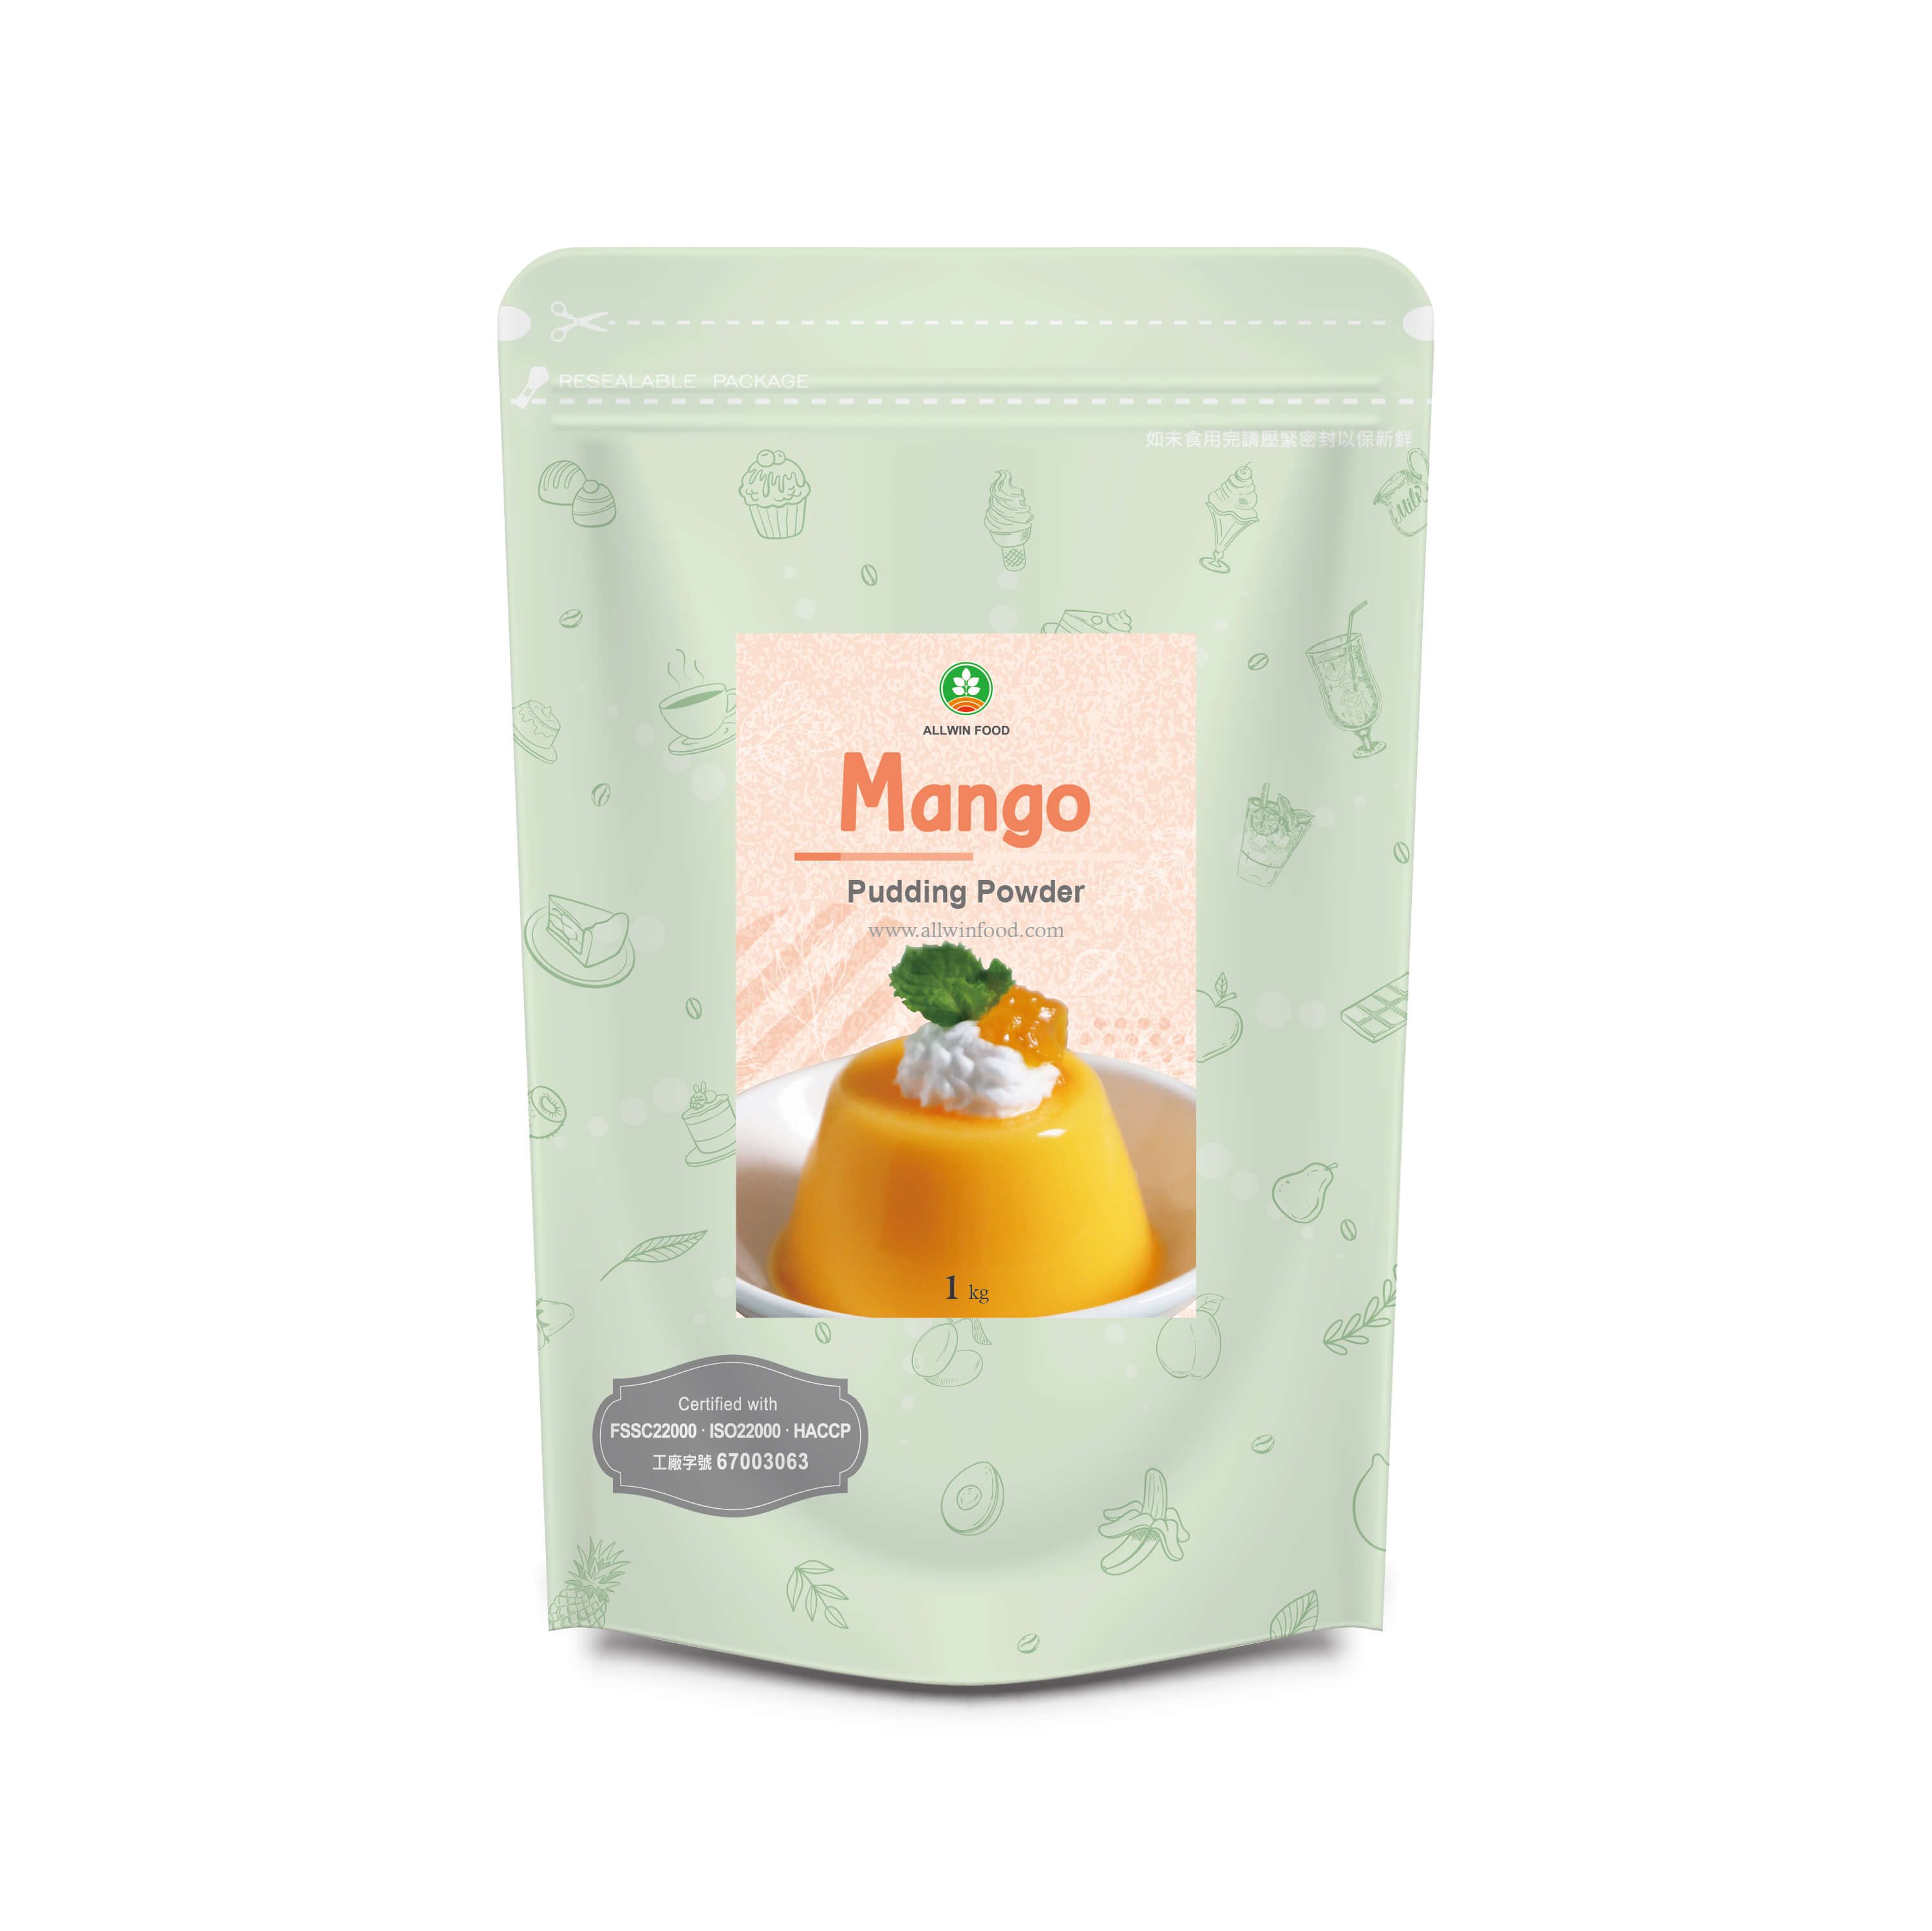 Mango Pudding Powder Supplier